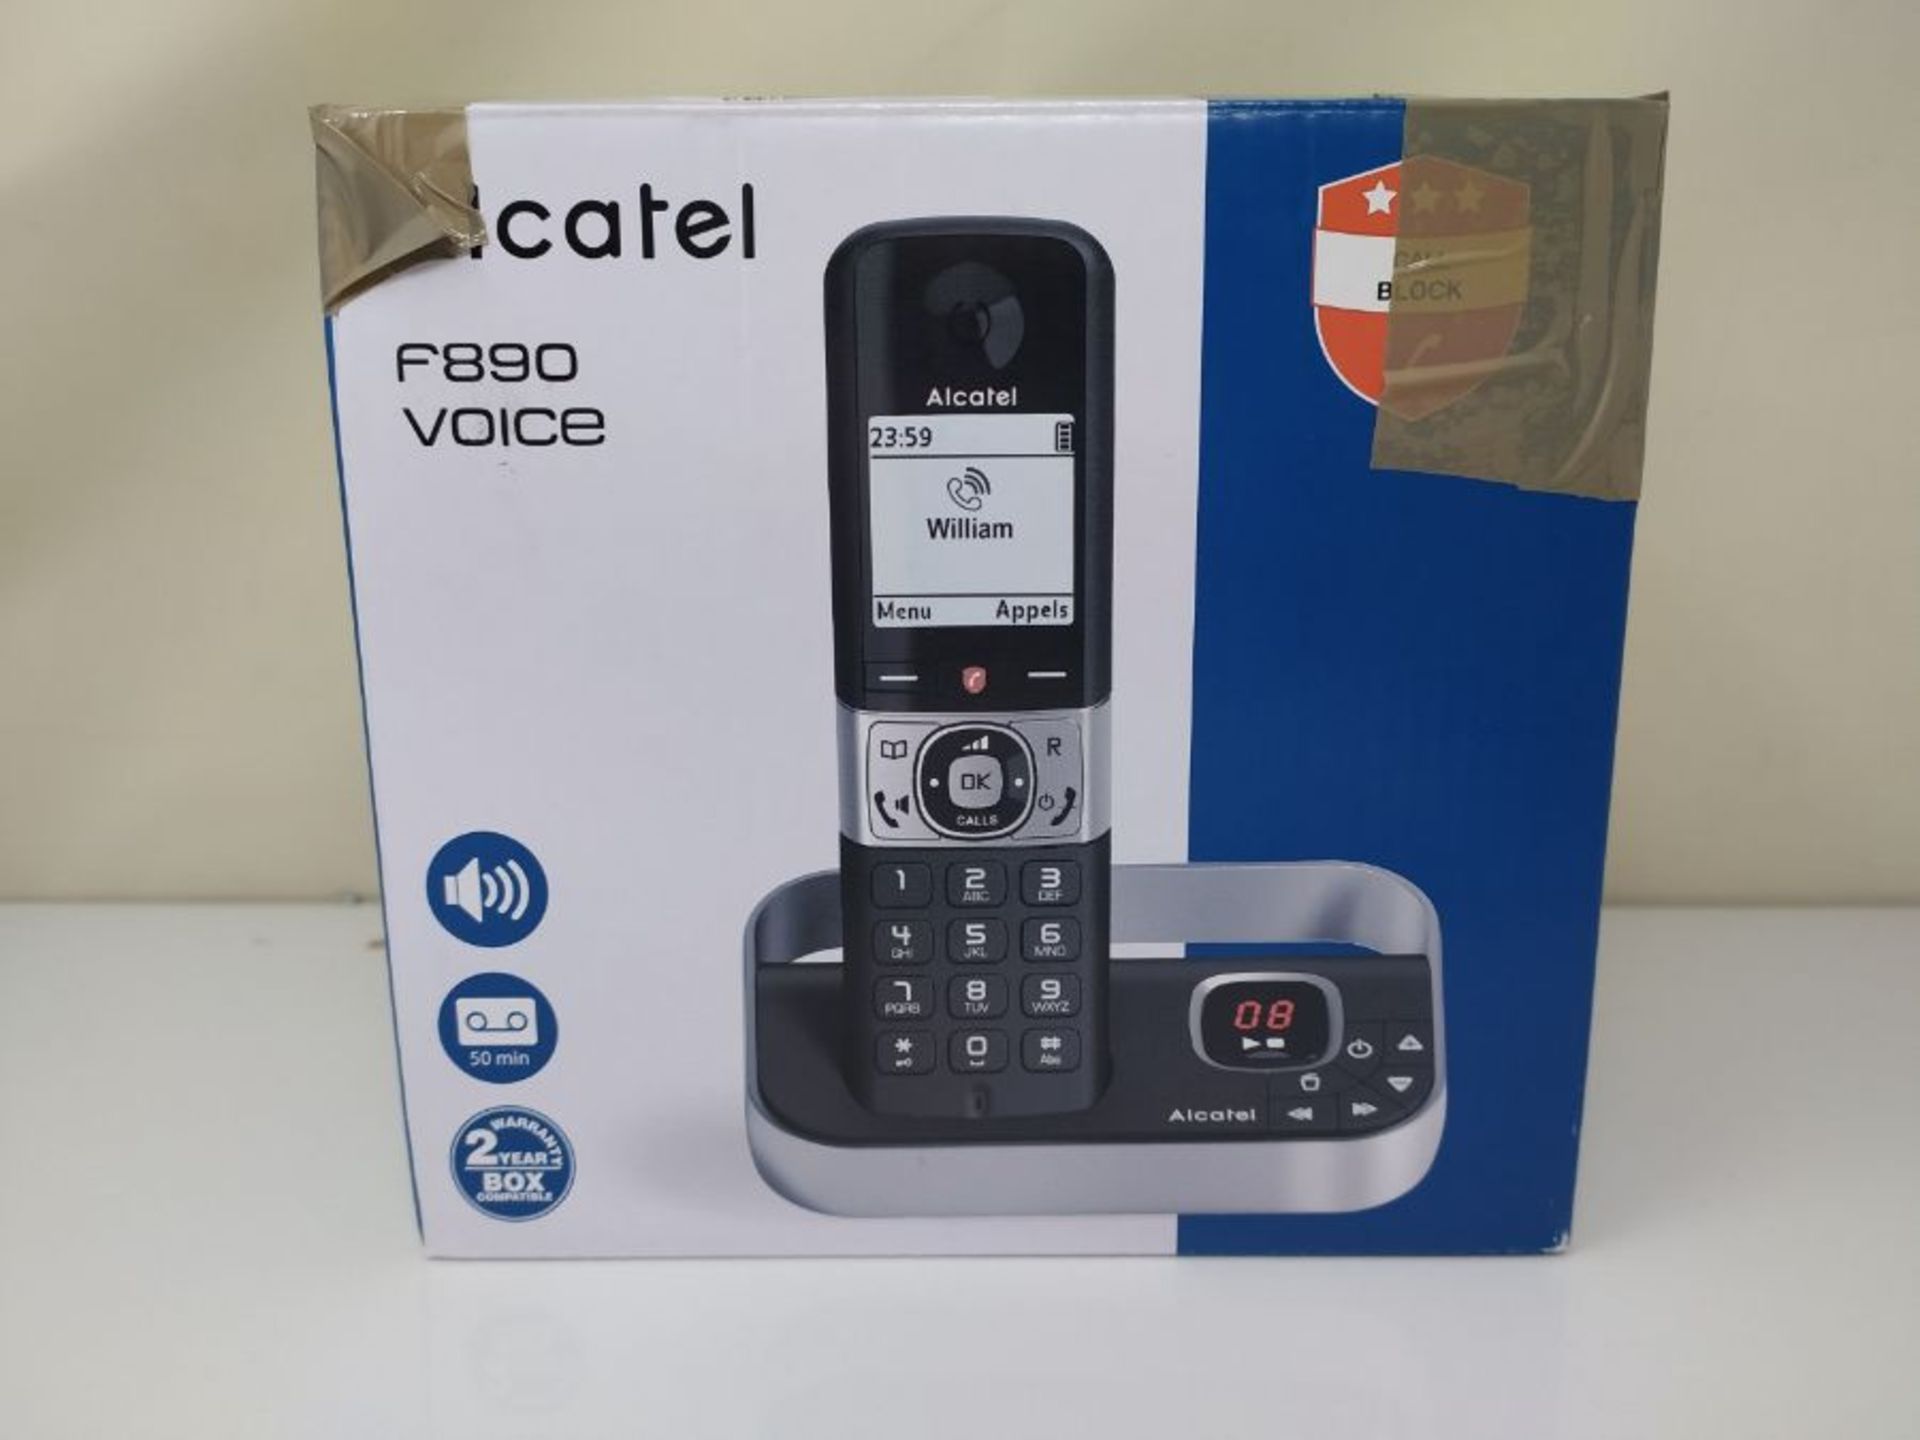 Alcatel Dect F890 Voice Fr Black Scallblock - Image 2 of 3